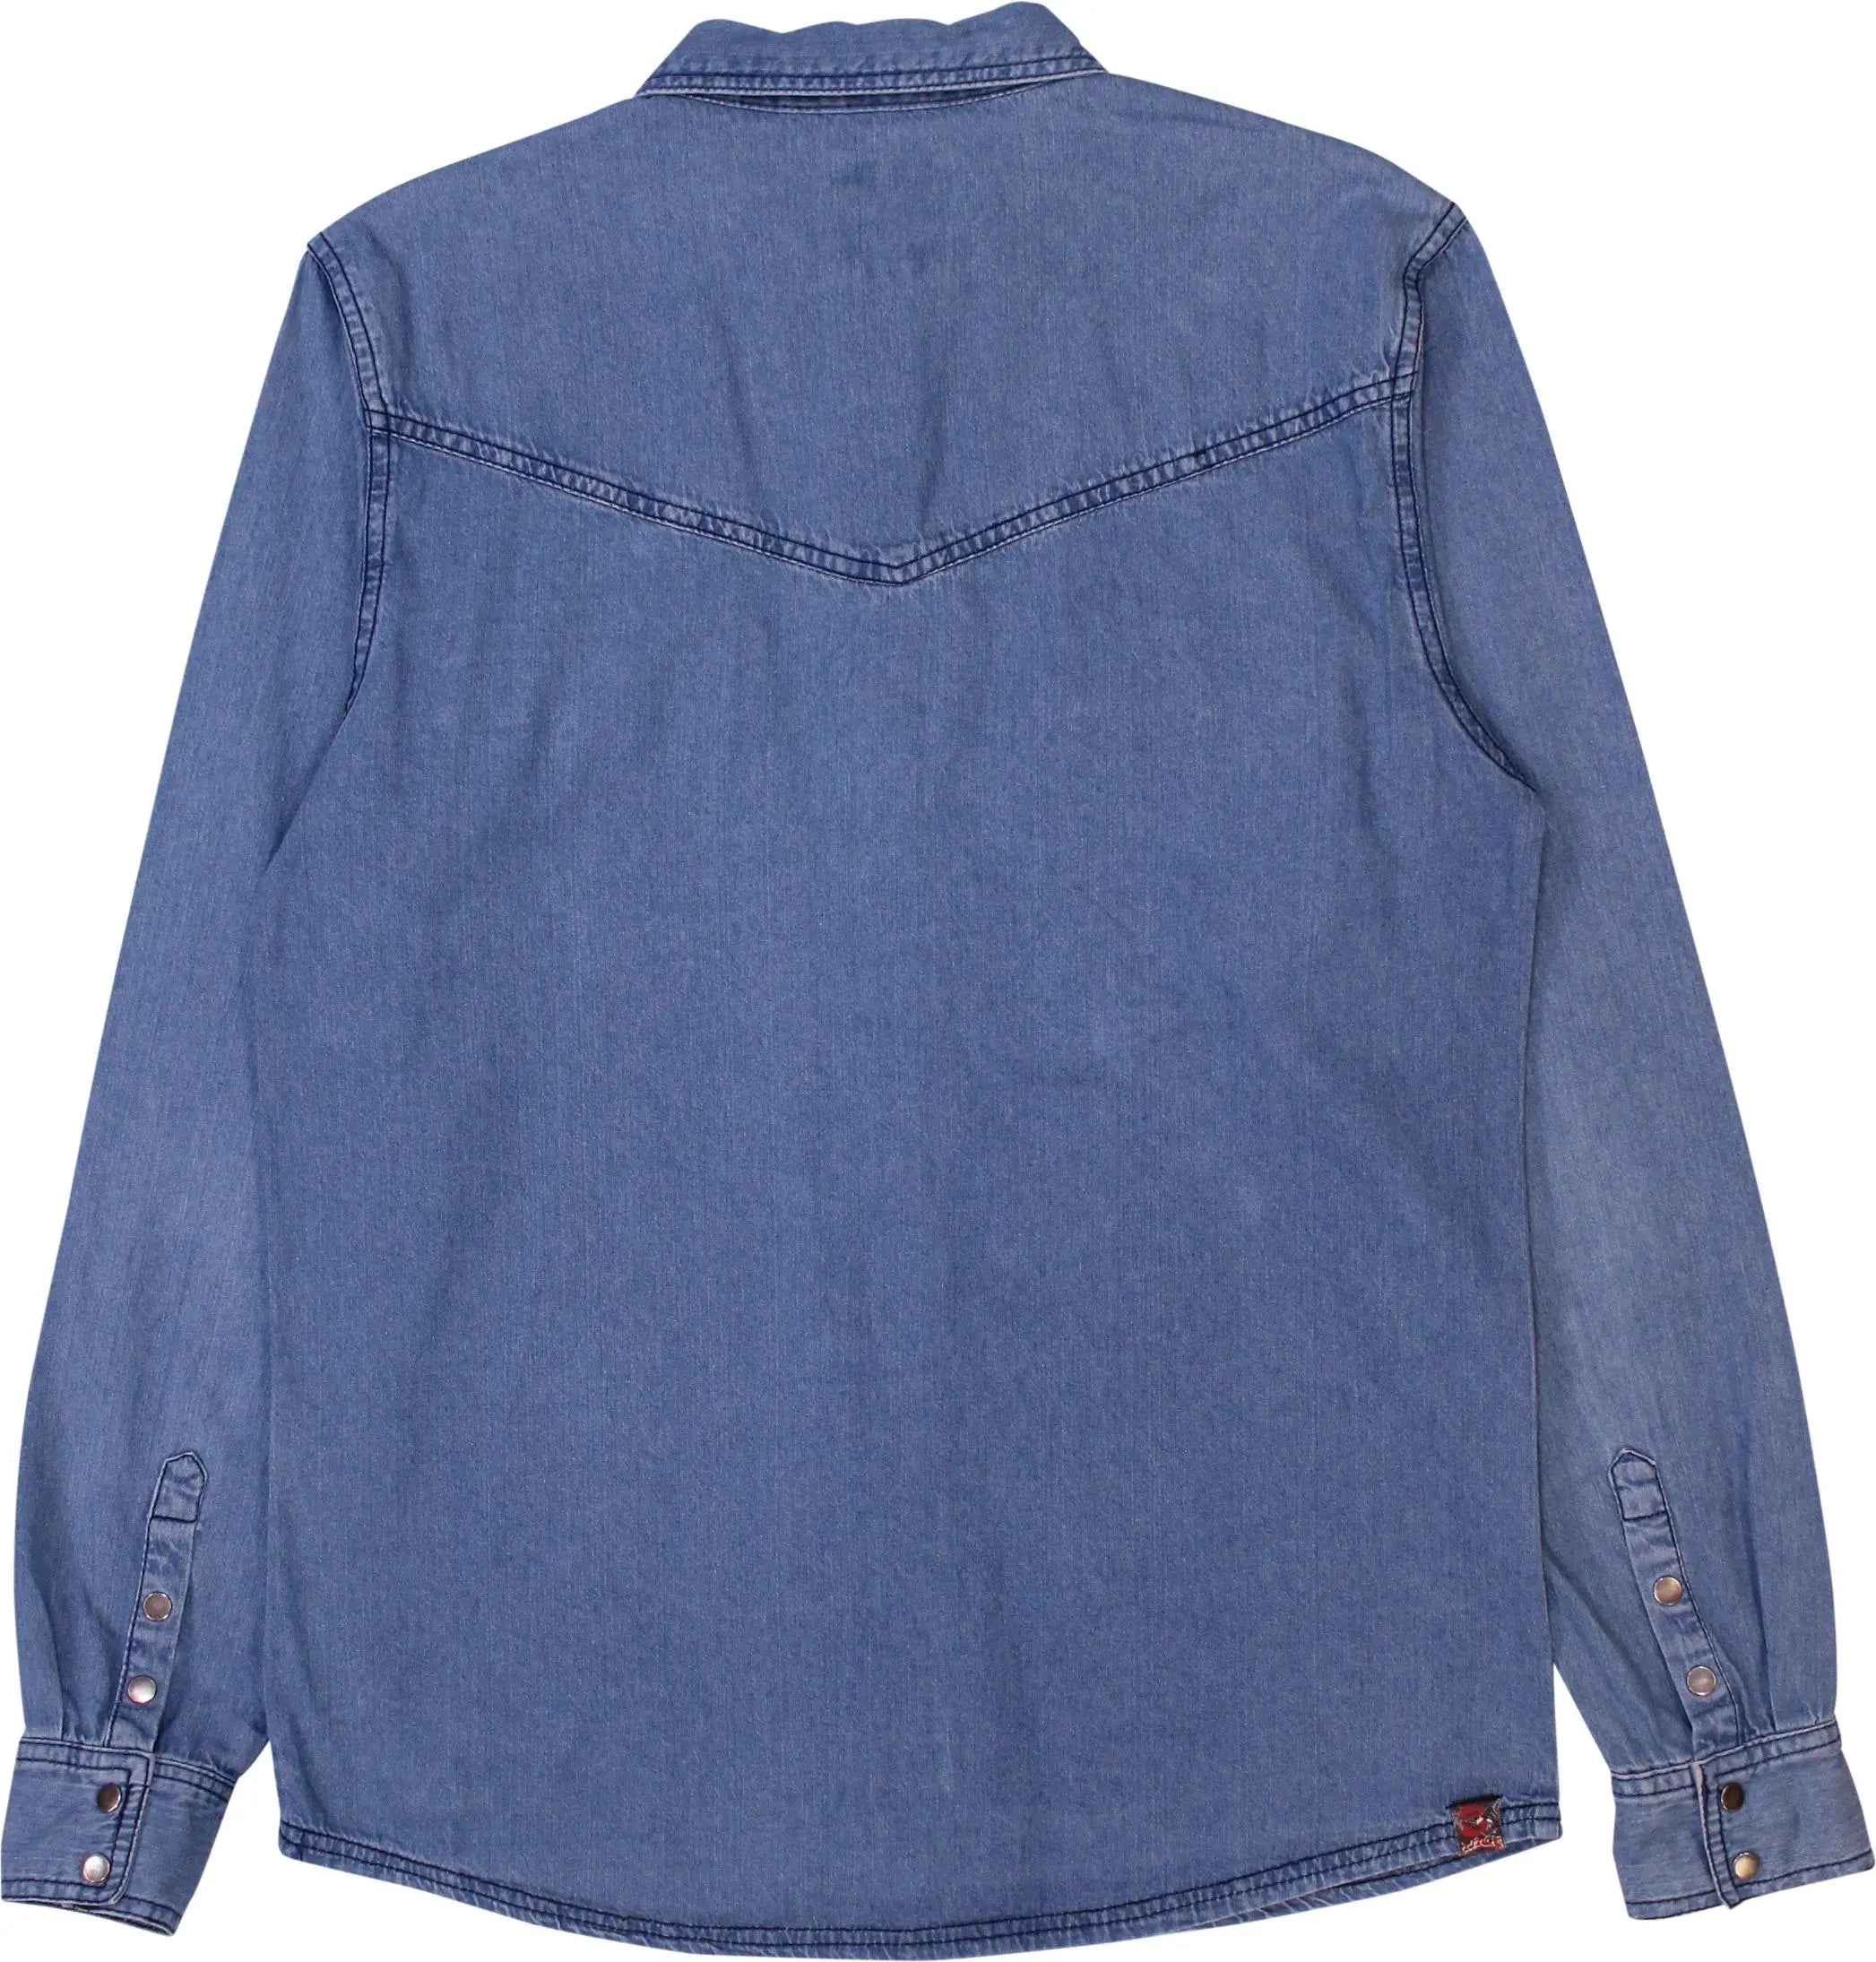 Up - Blue Denim Shirt- ThriftTale.com - Vintage and second handclothing